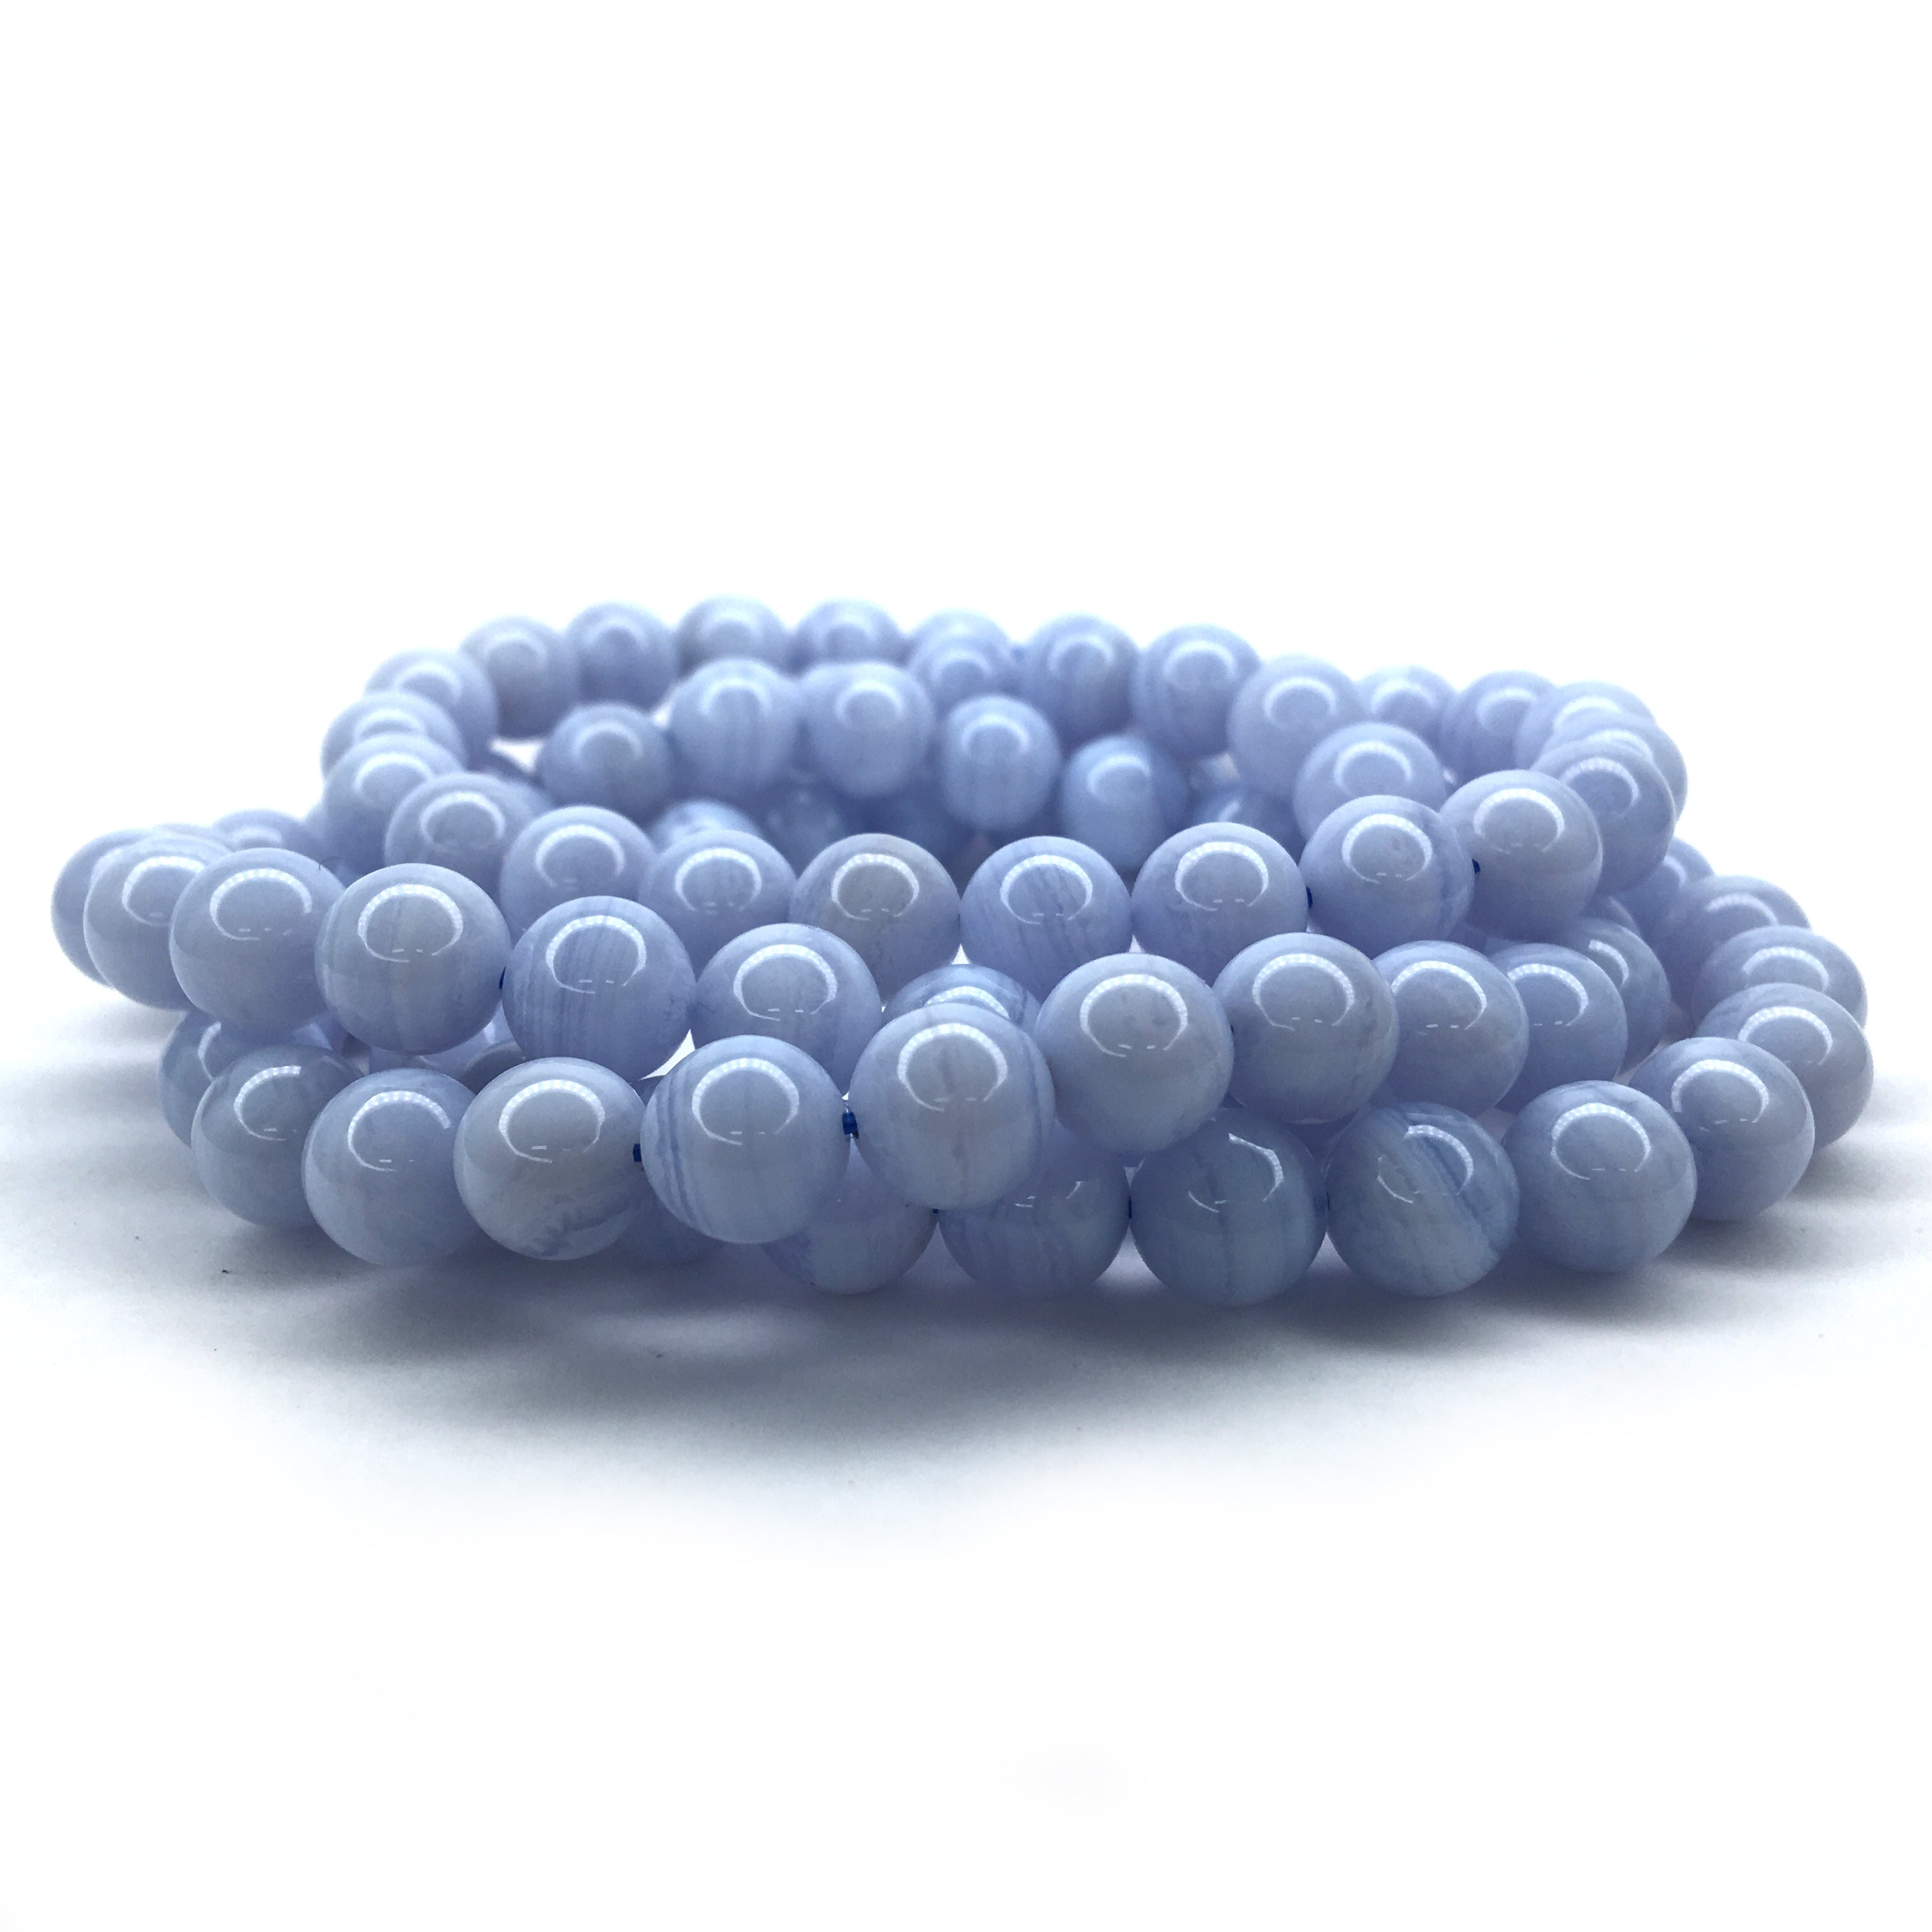 Blue Lace Agate Crystal Bracelet - Happy Soul Online